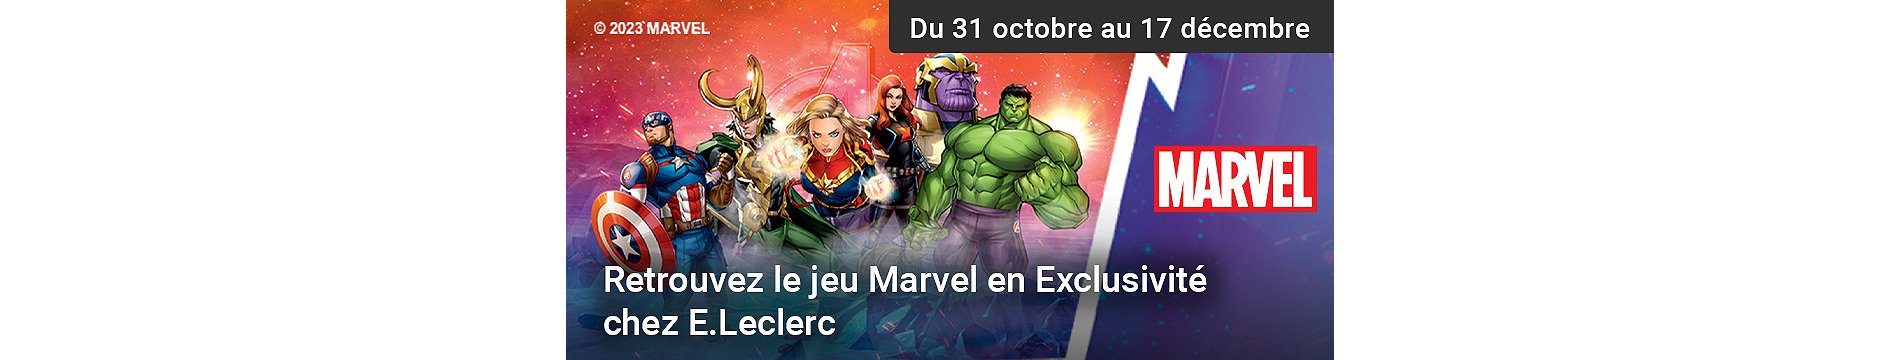 Fève Hulk Buste Marvel Avengers Galette Des Rois Disney Leclerc - Marvel